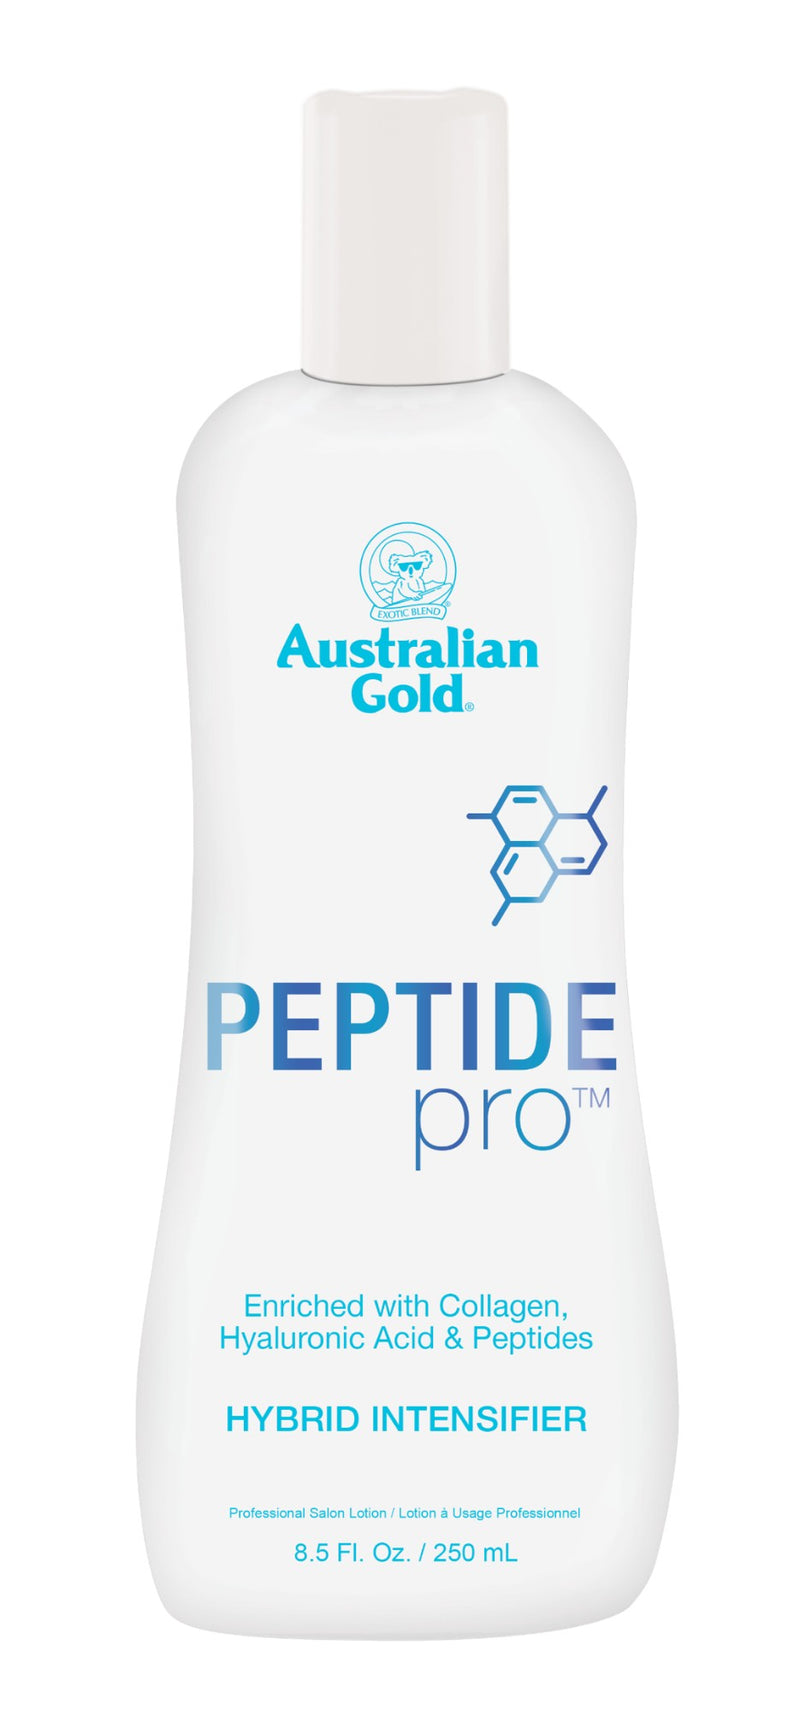 Australian Gold Peptide Pro kremas deginimuisi soliariume